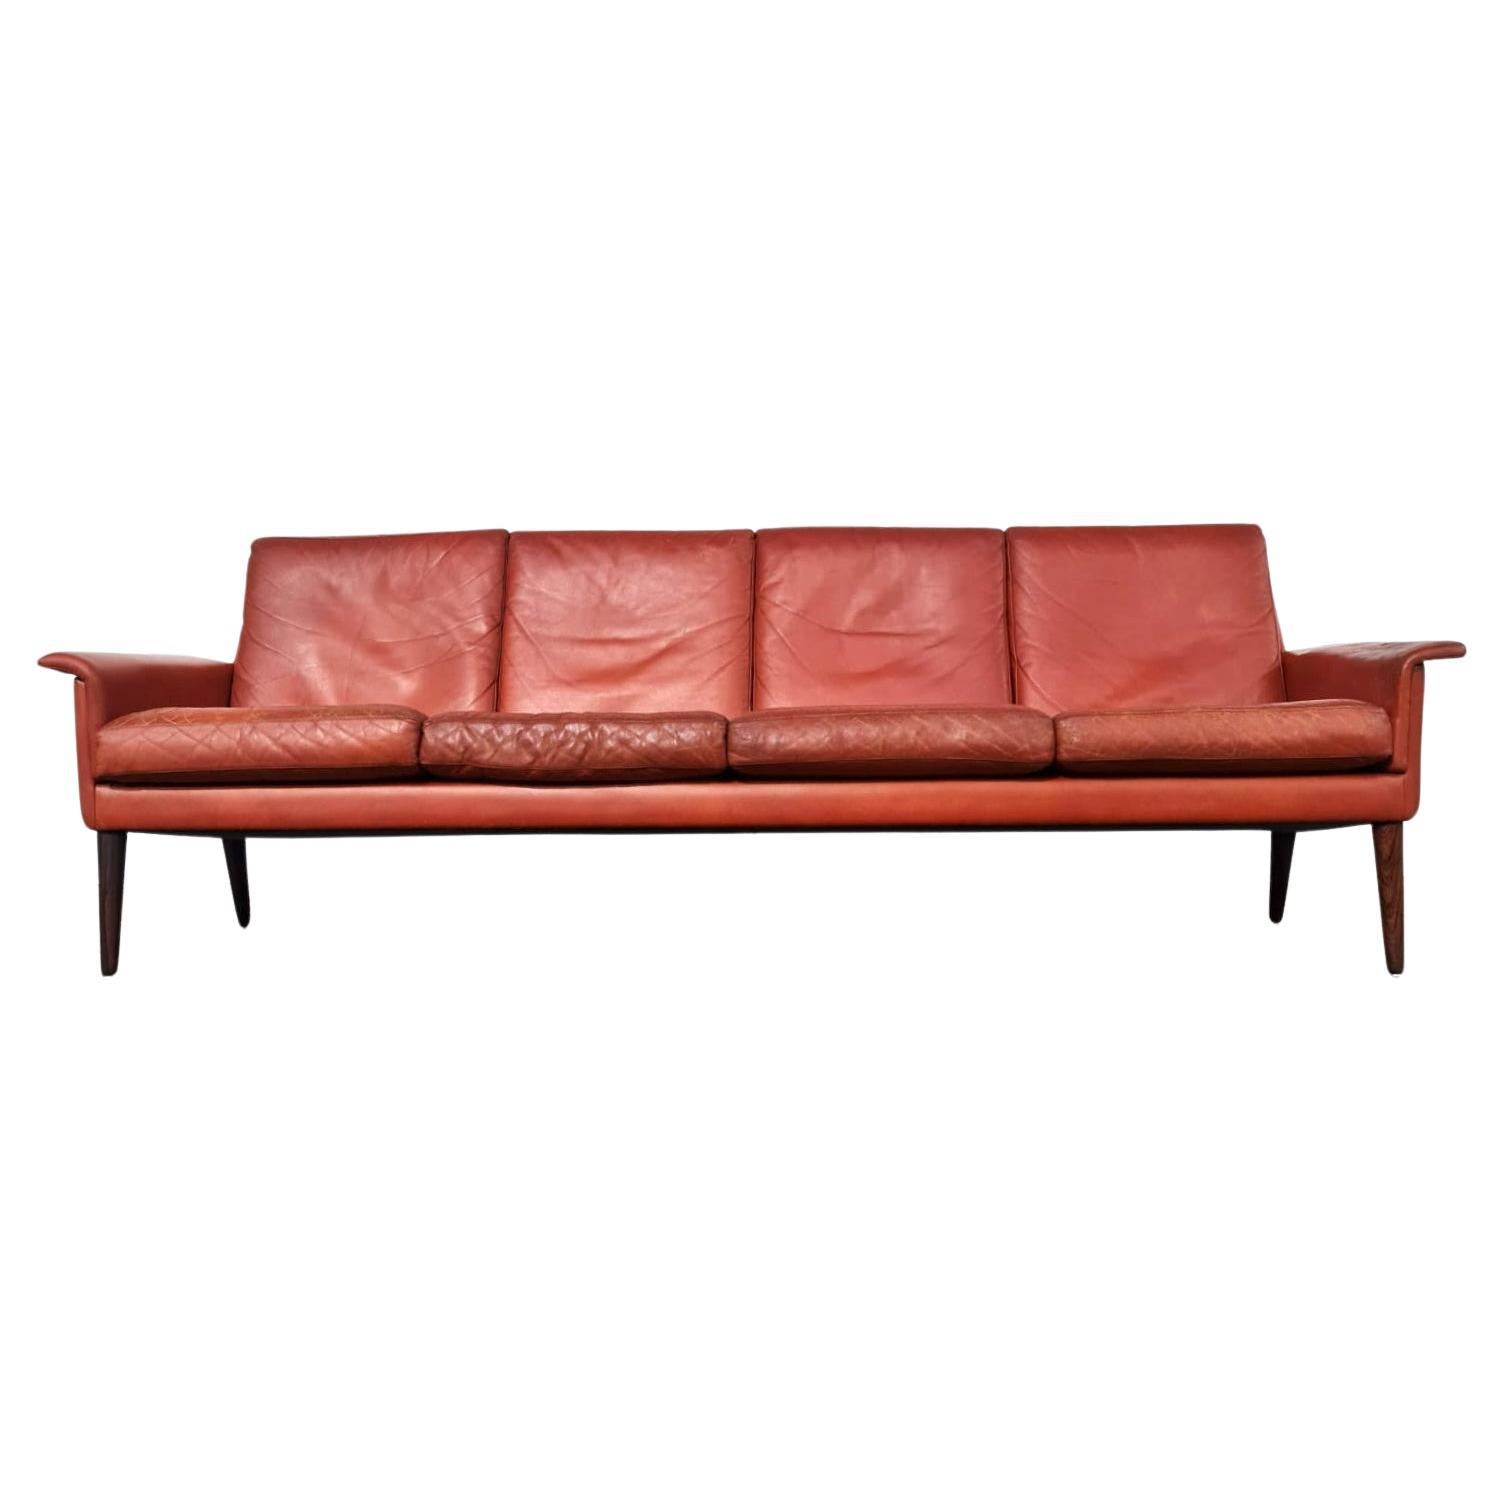 1960's Danish Borge Mogensen Leather Sofa For Sale